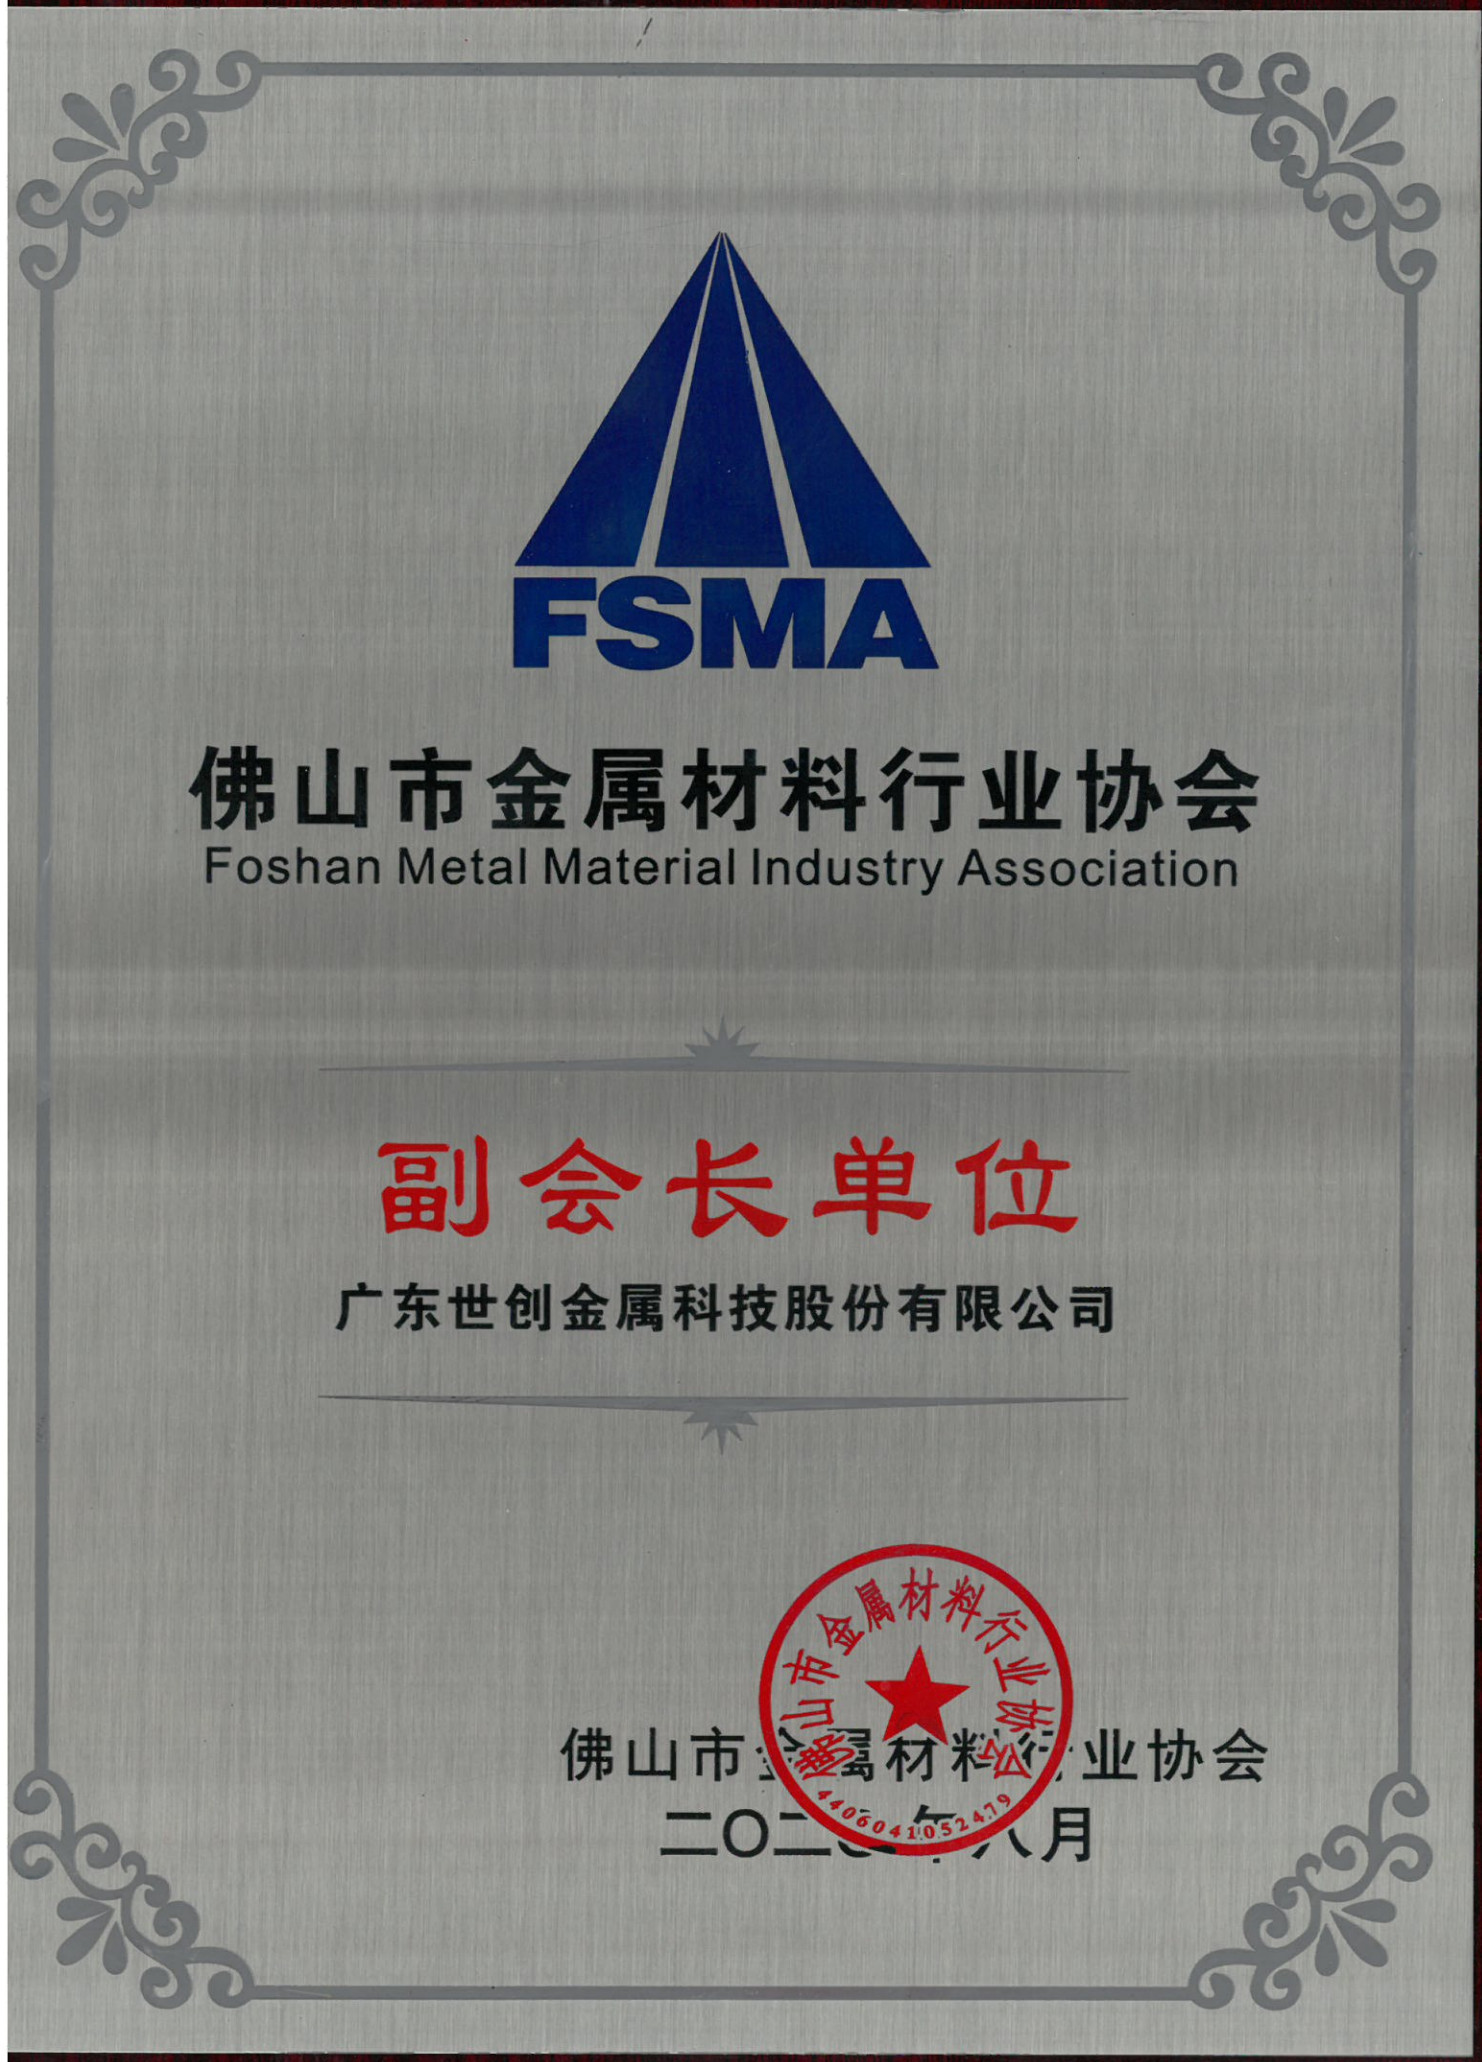 Vice President Member of Foshan Metal Materials Industry Association